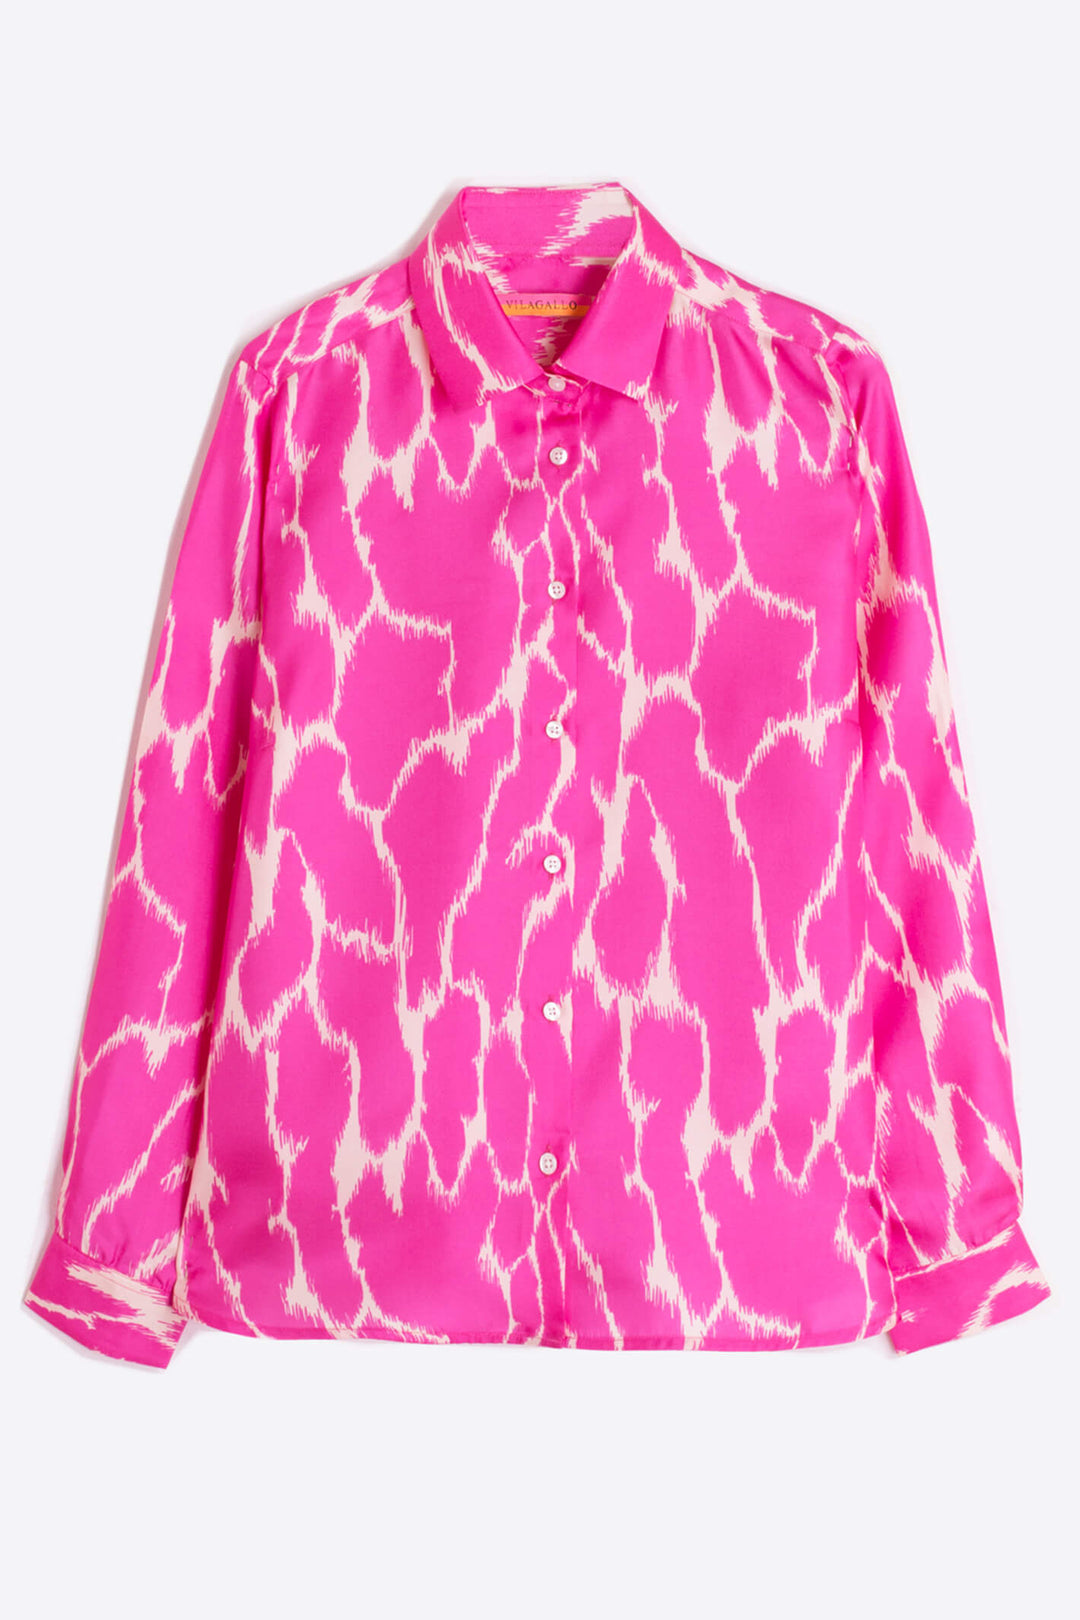 Vilagallo 30808 Pink Animal Print Isabella Pure Silk Shirt - Experience Boutique